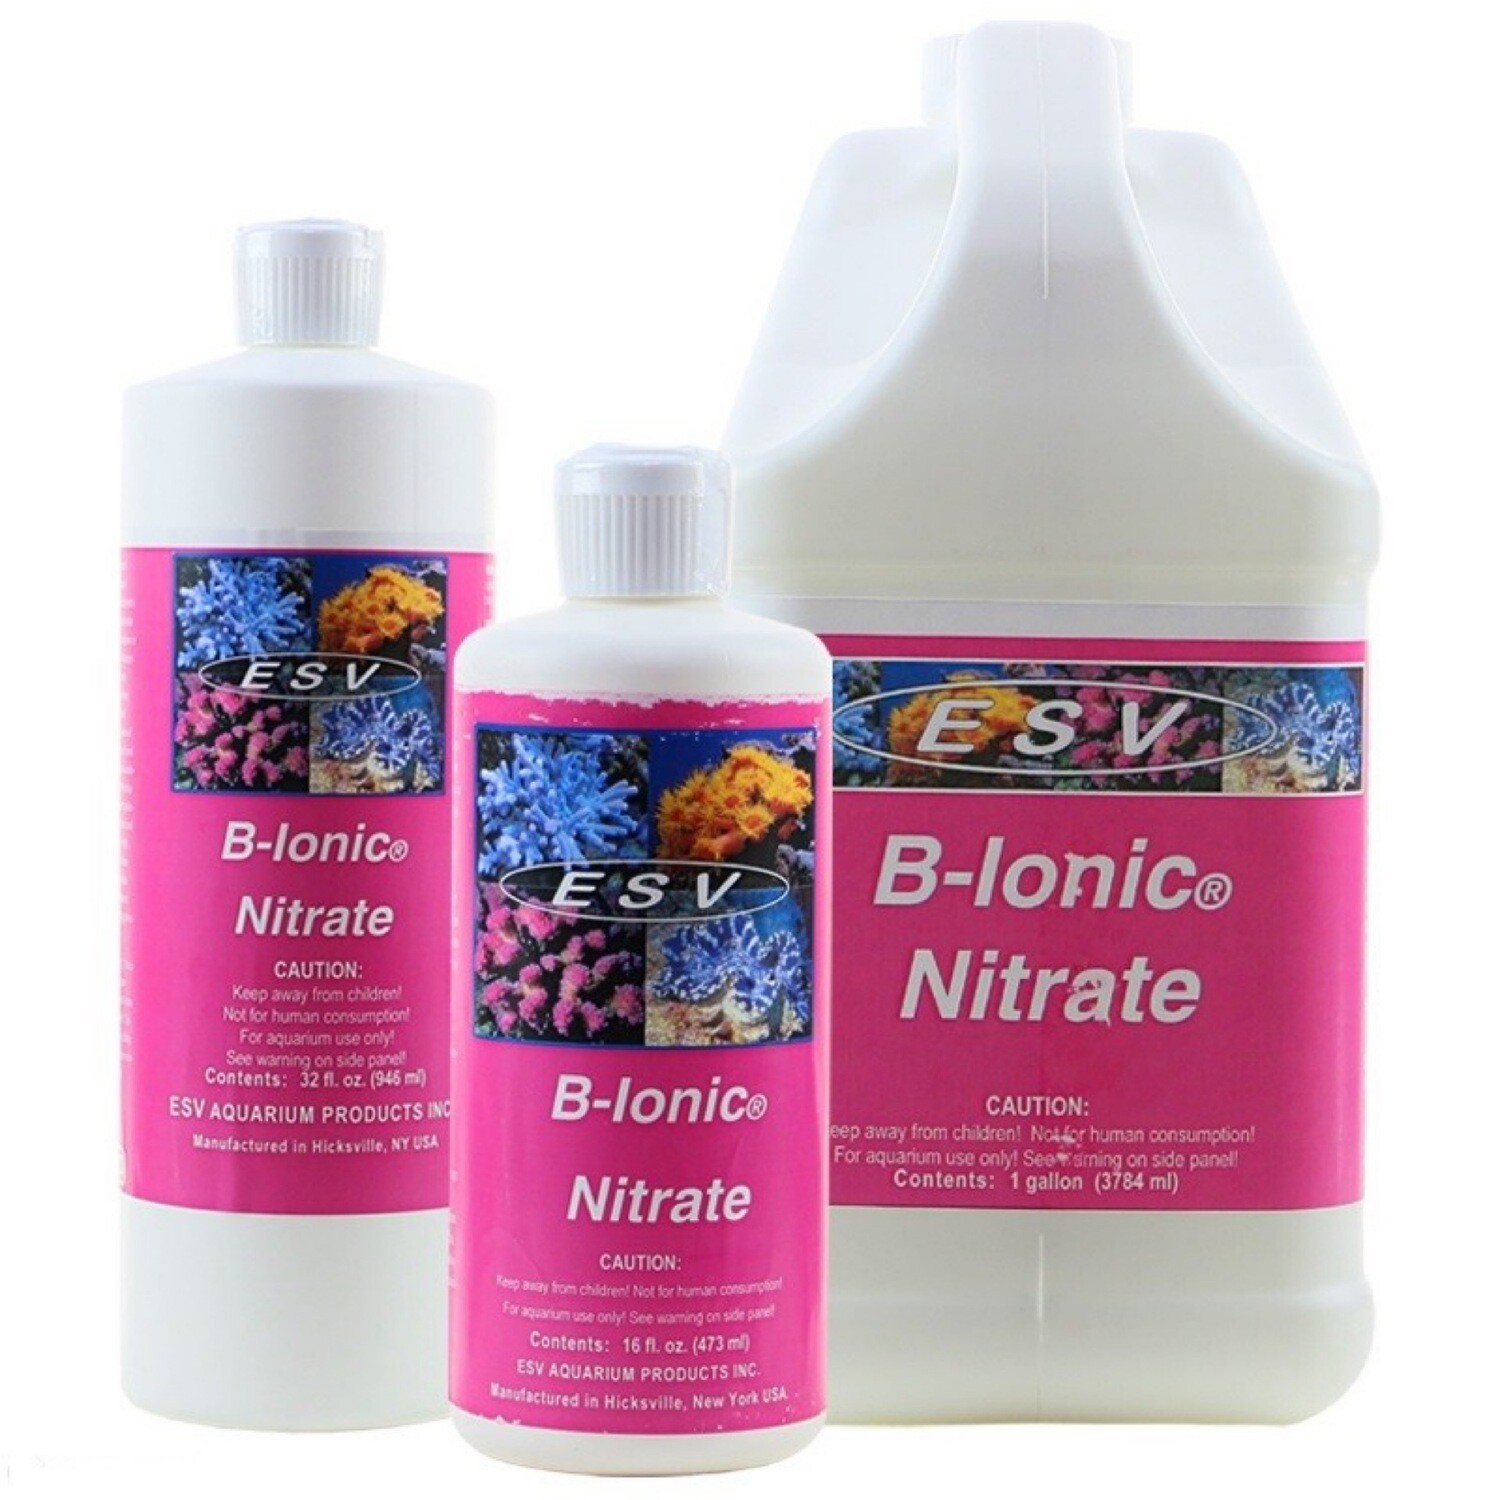 ESV B-Ionic Nitrate